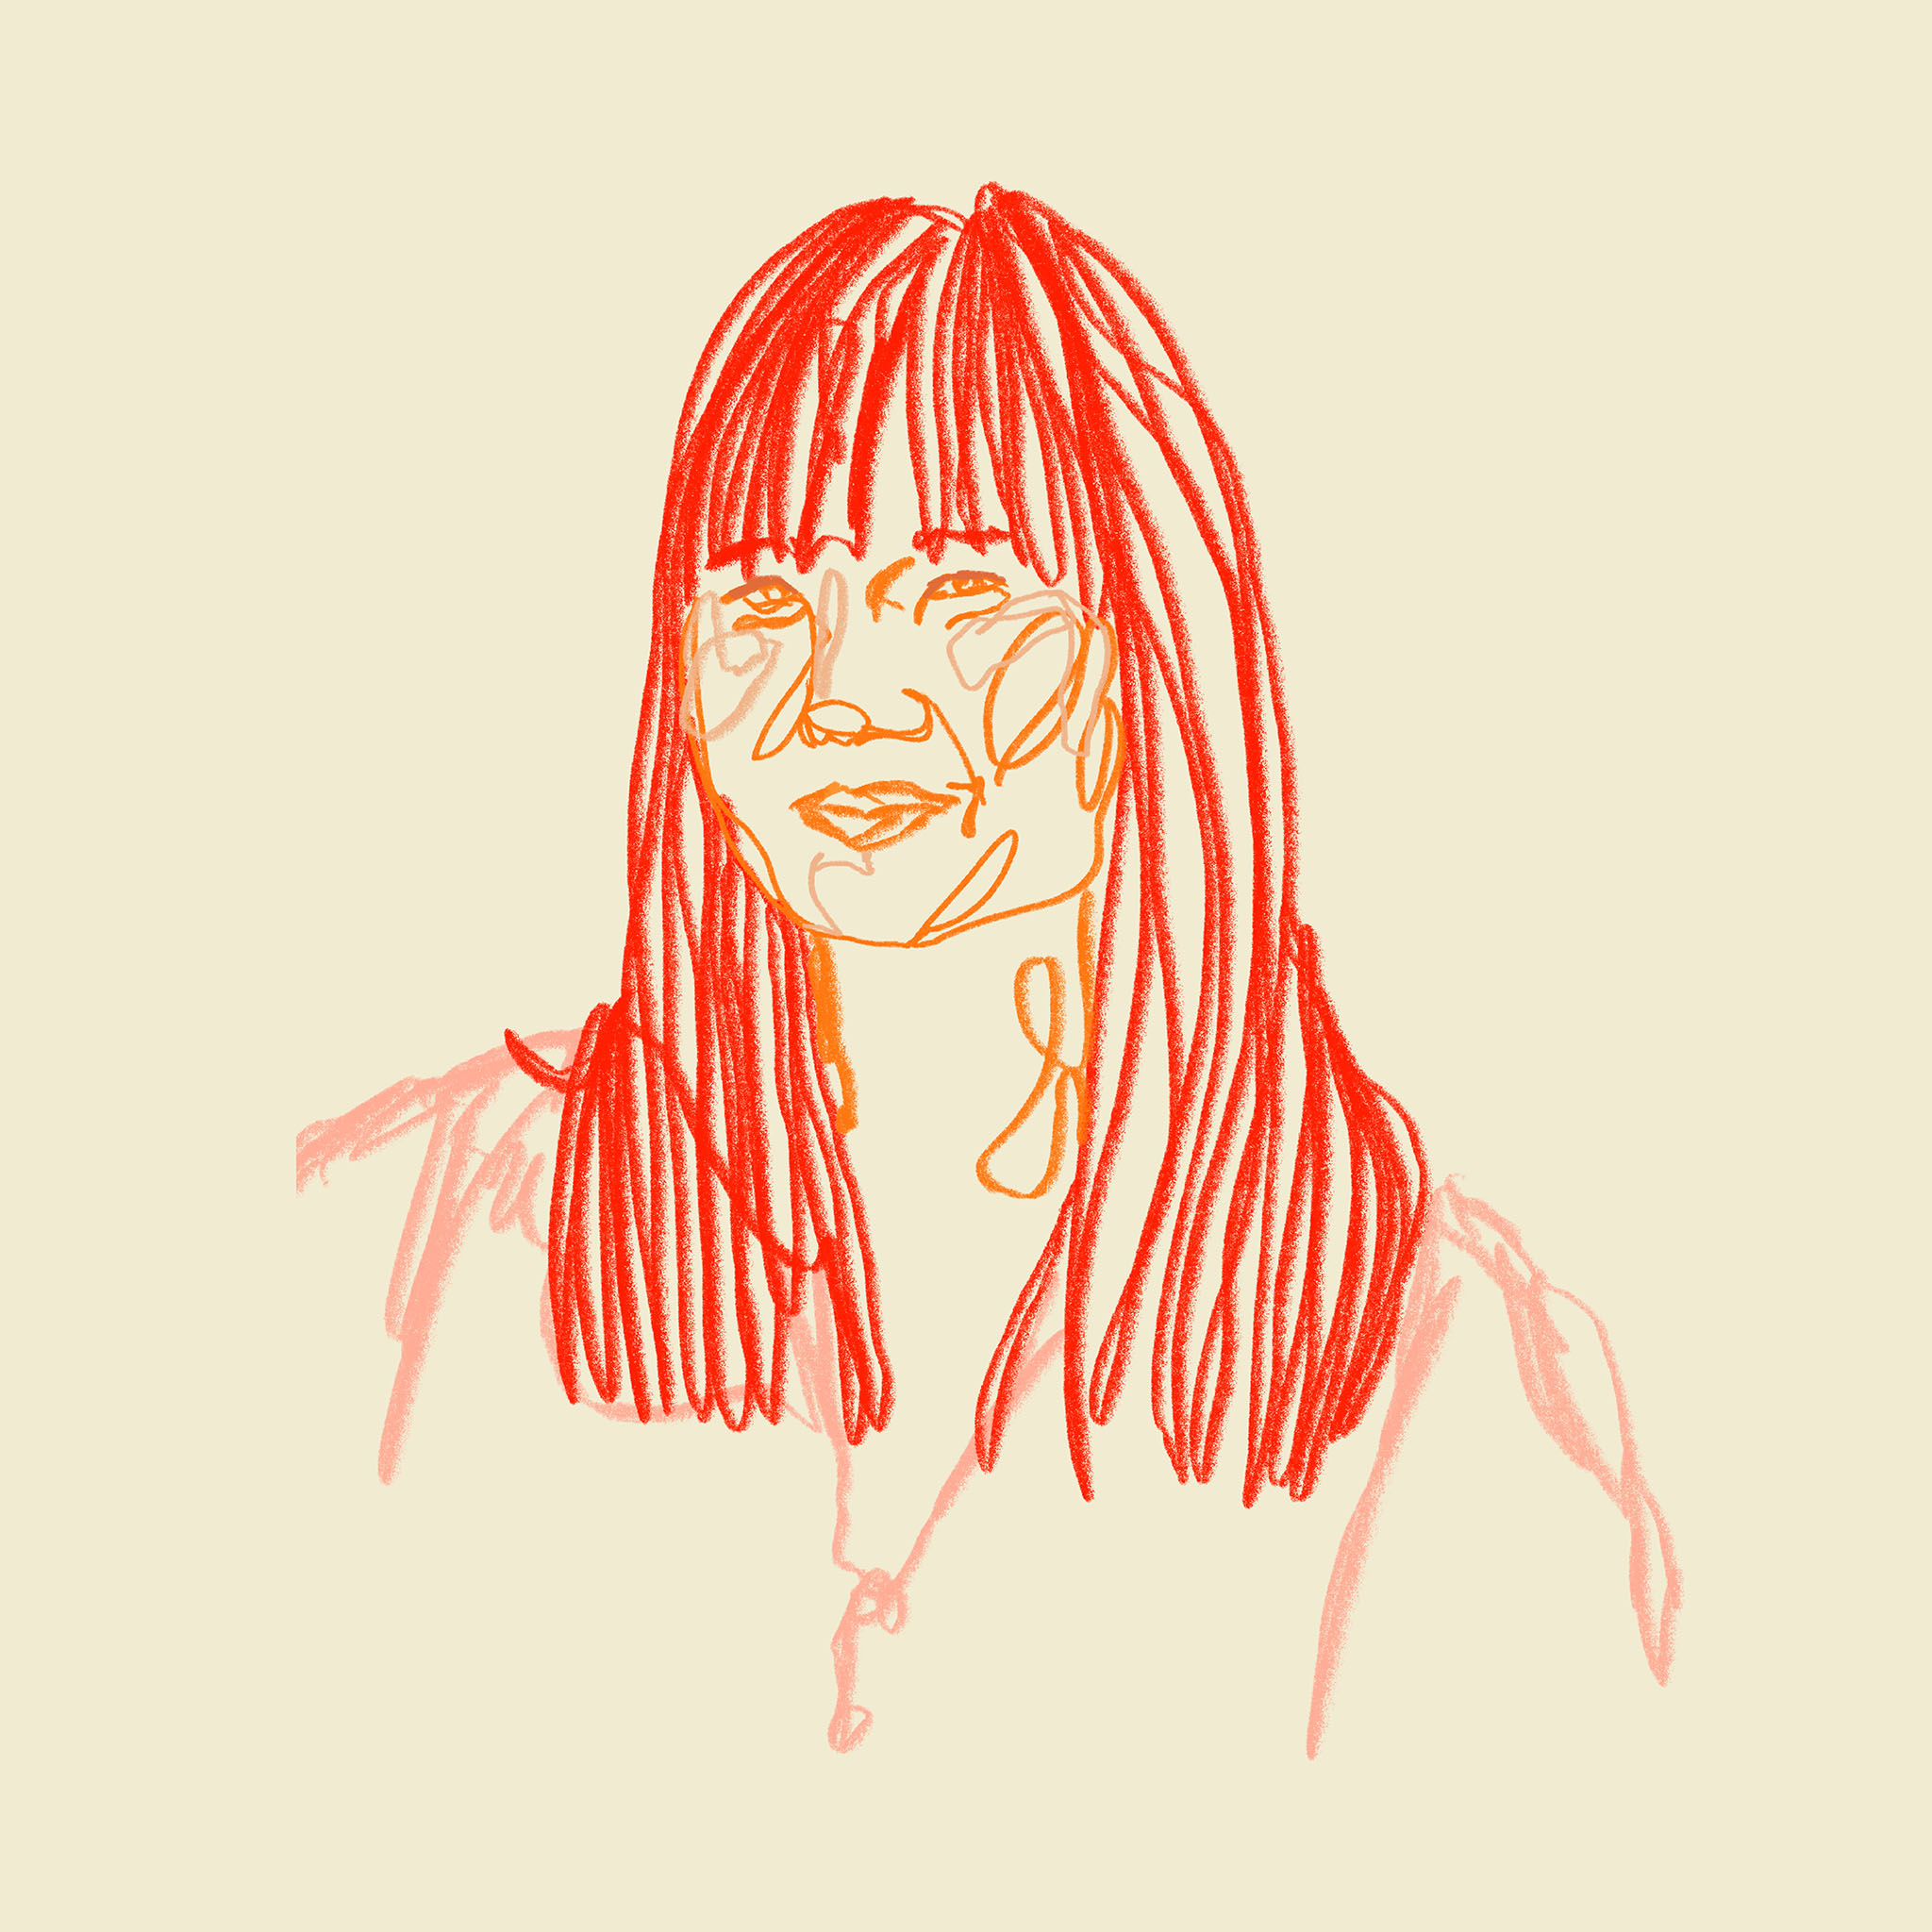 Illustrated portrait of Amanda Phingbodhipakkiya